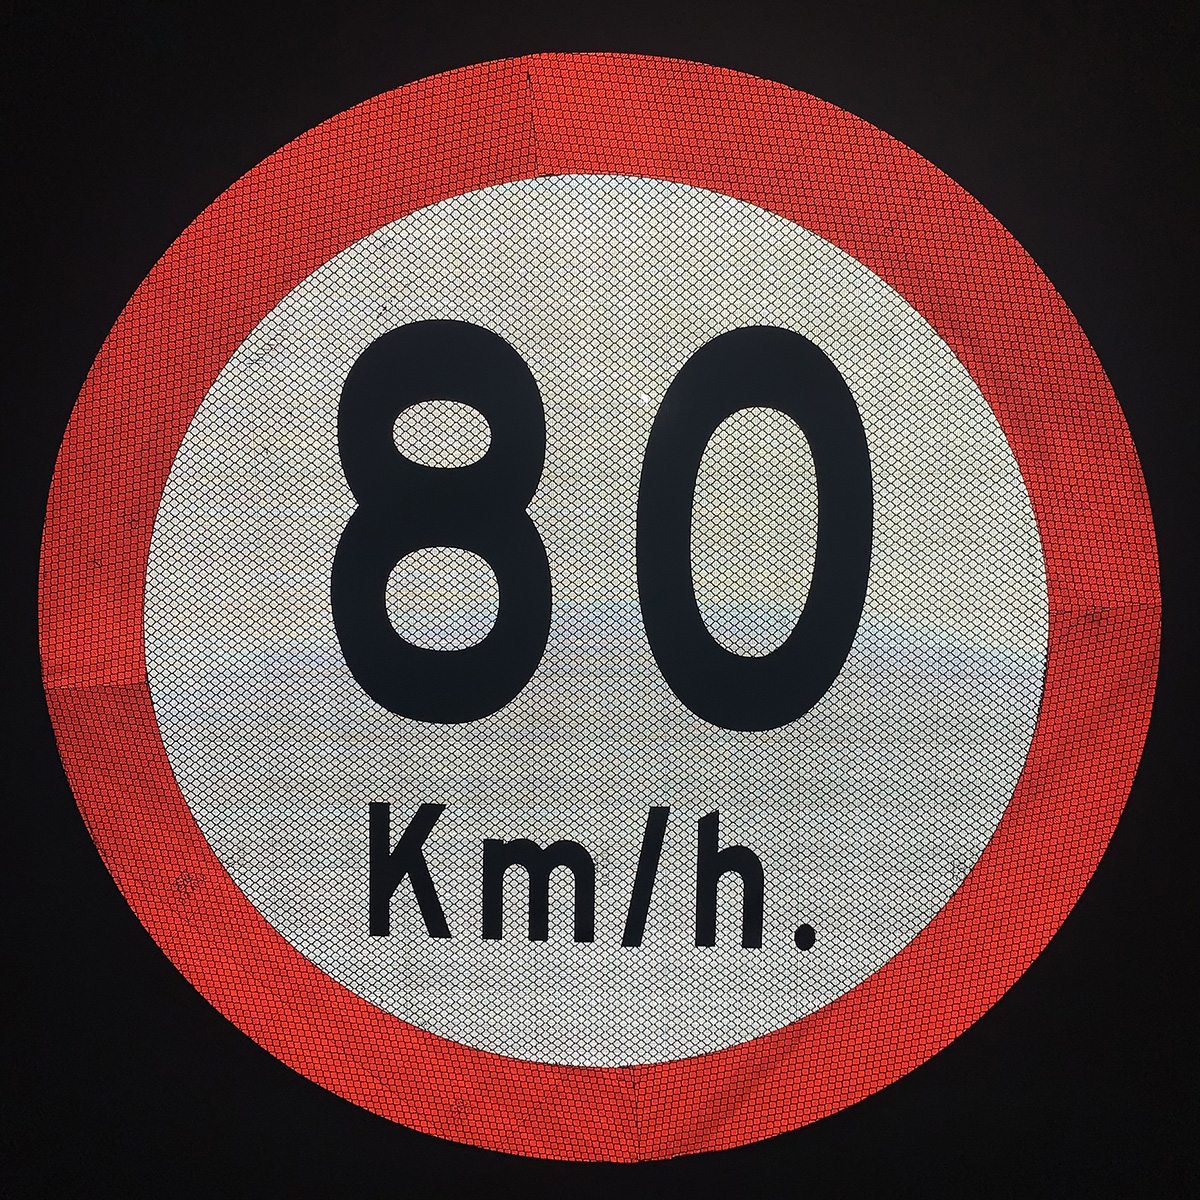 60cm "80KM/H" Reflective Aluminium Traffic Sign Plate